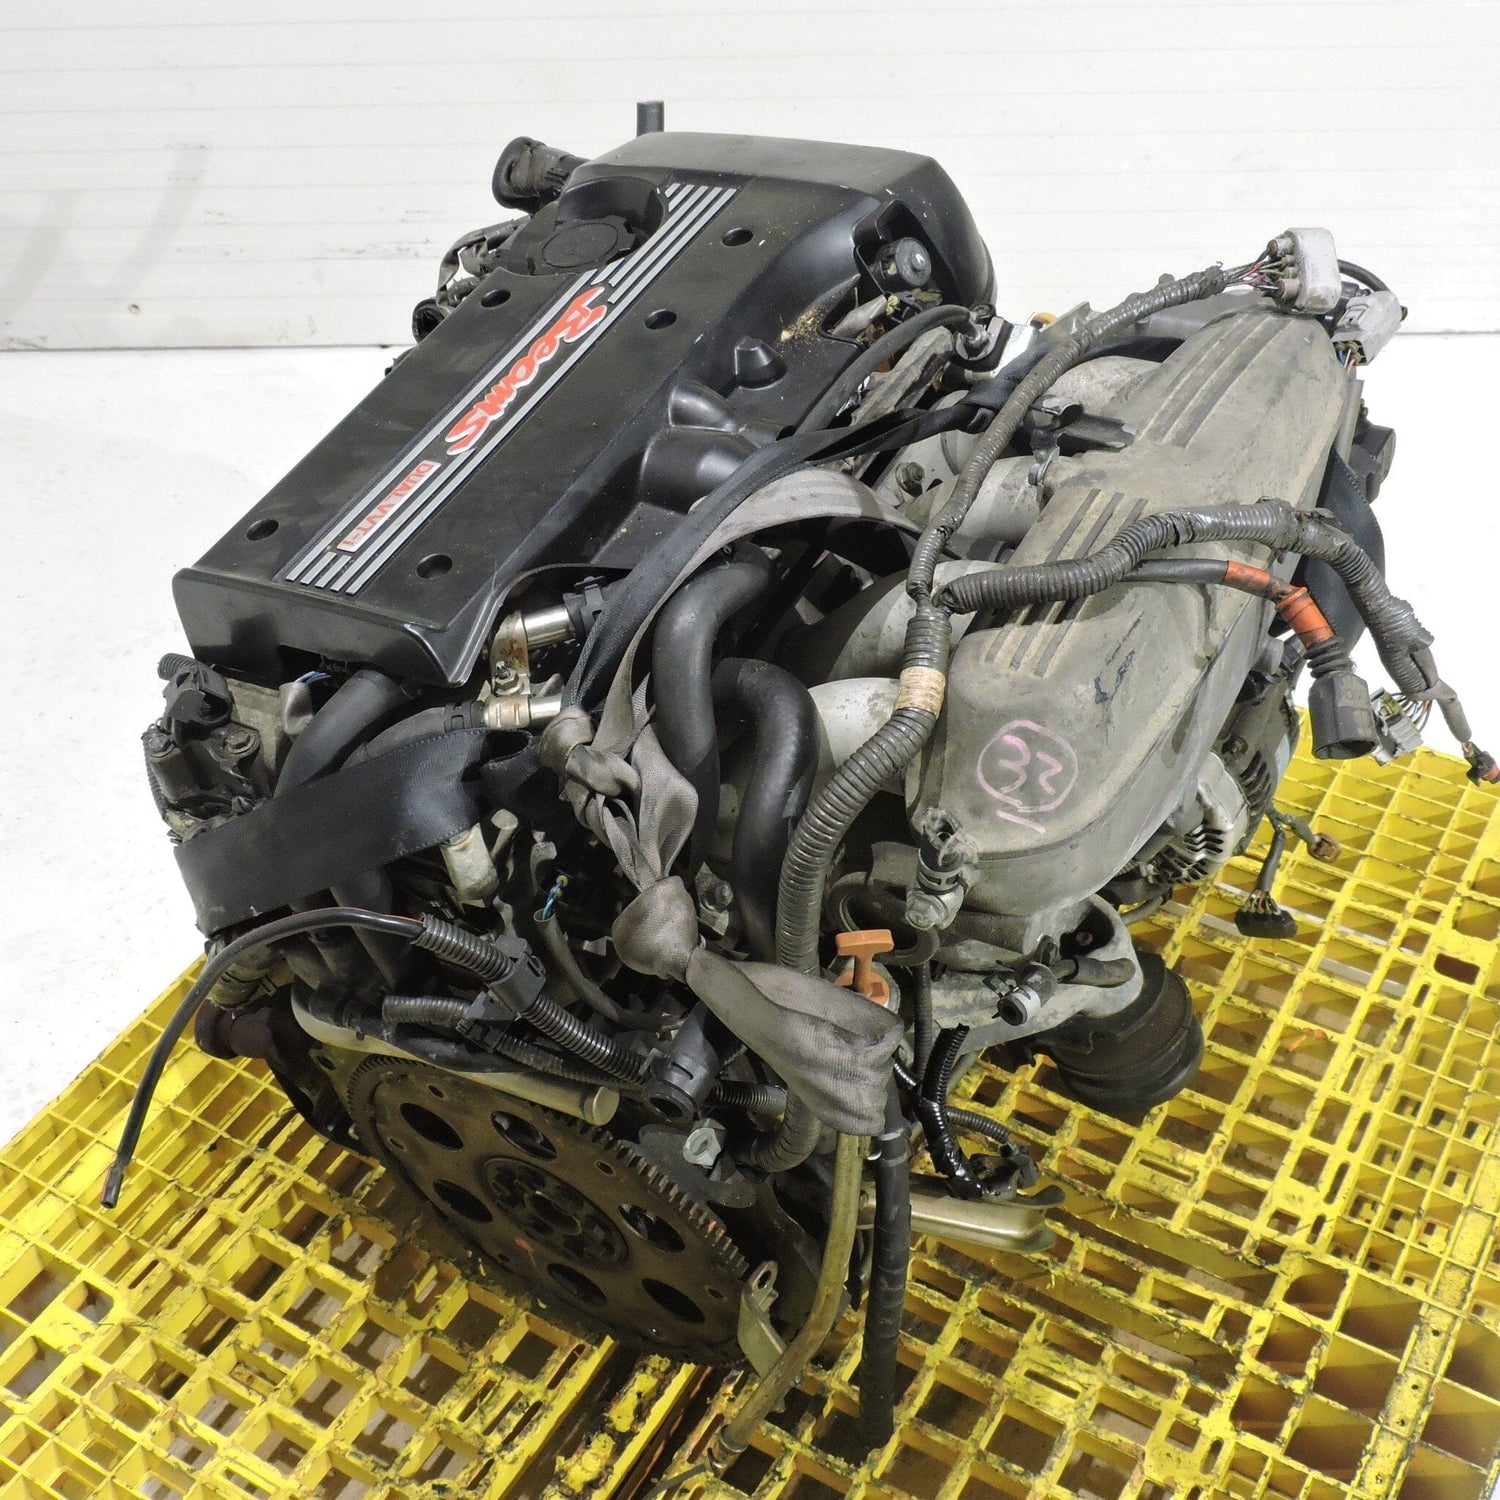 Toyota 2.0L Dual Vvti Automatic JDM Engine - 3S-GS Beams